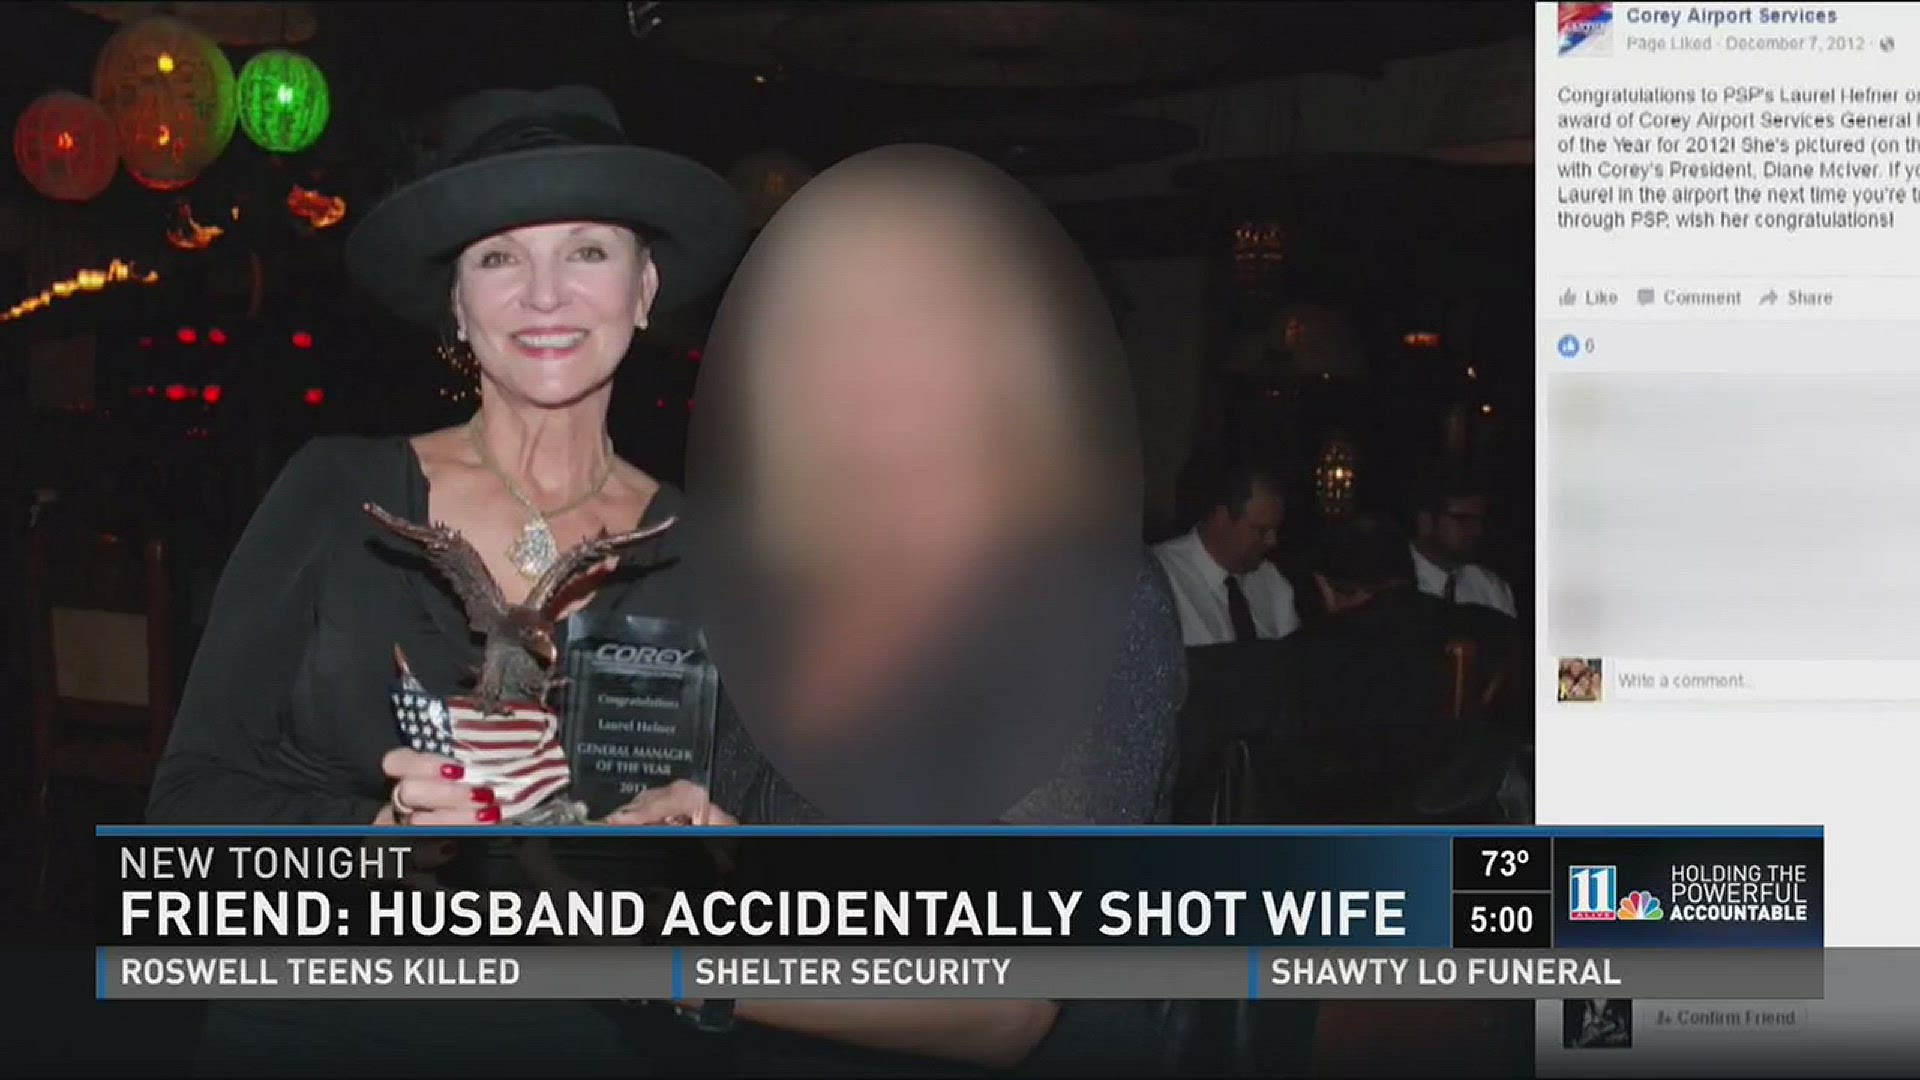 Friend Husband accidentally shot wife pic